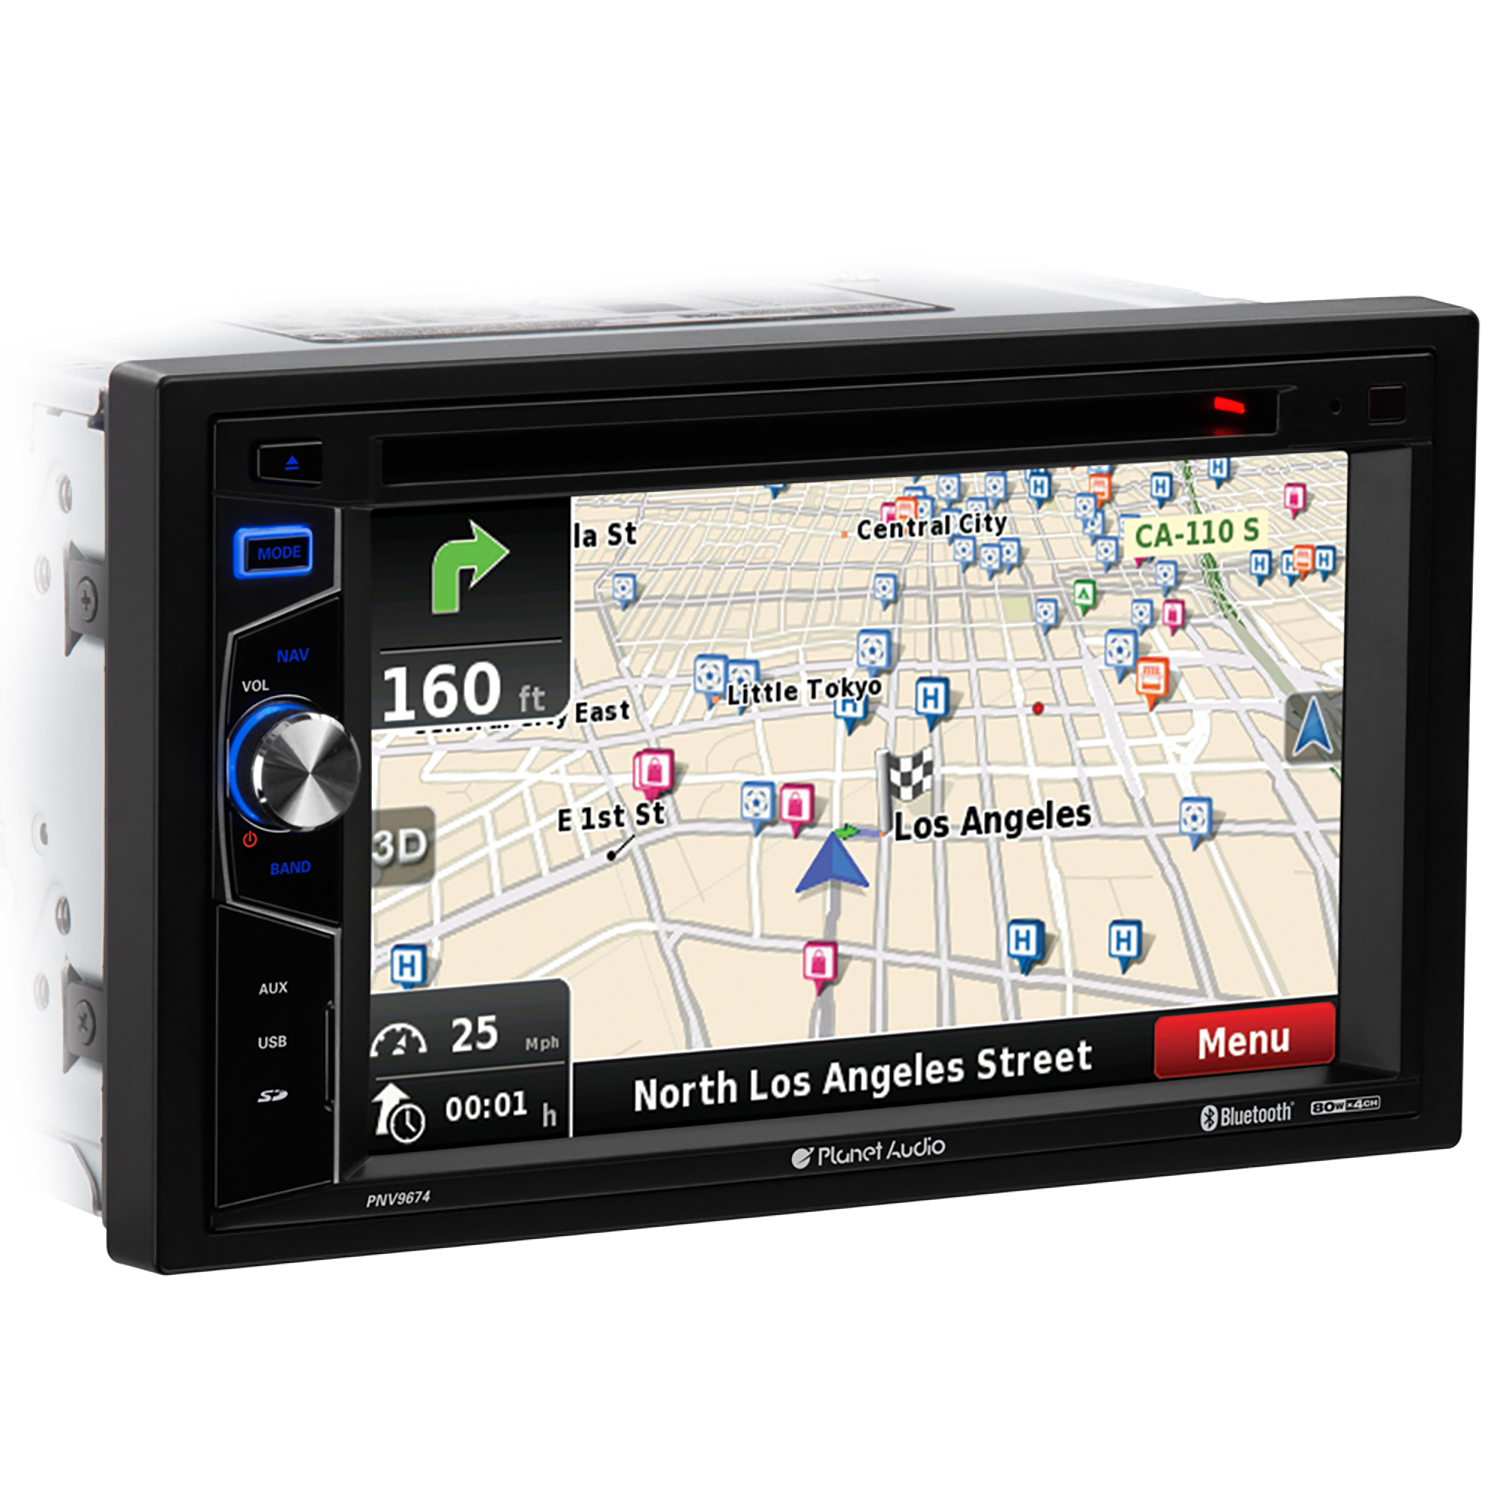 Planet Audio PNV9674 Car 6.2” Touchscreen Bluetooth Navigation, DVD USB SD AM/FM - image 1 of 9